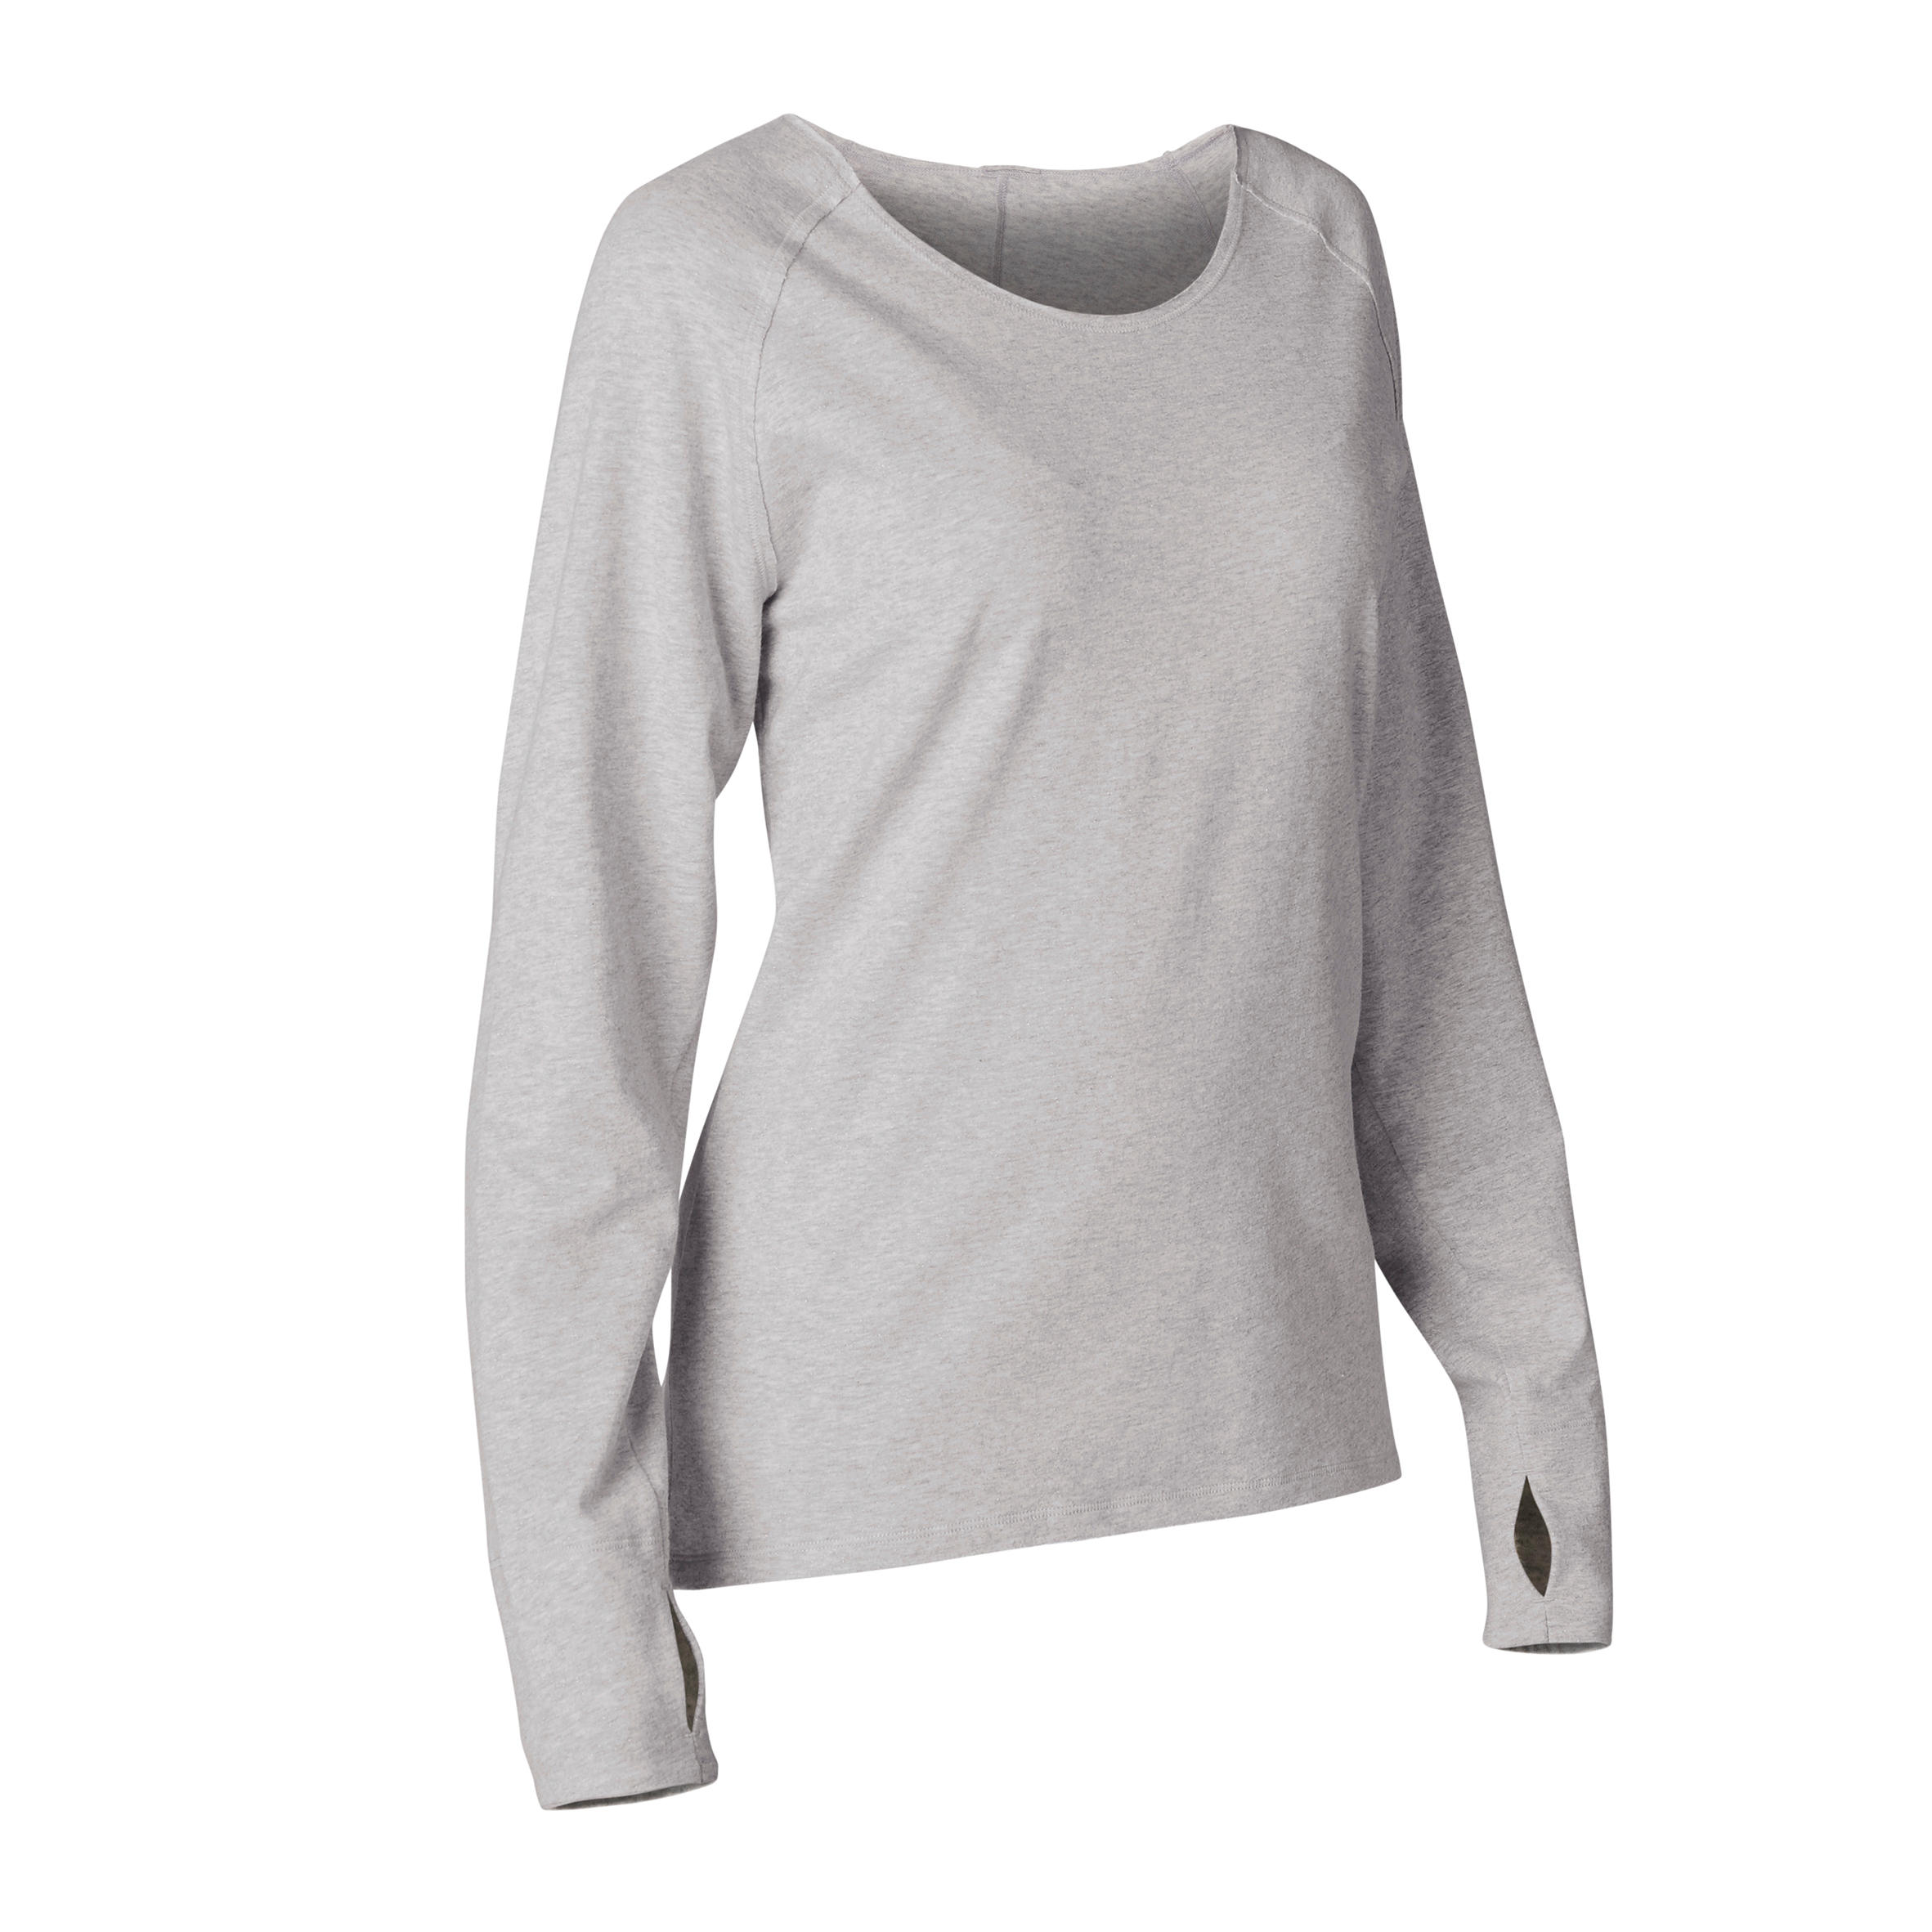 KIMJALY Organic Cotton Long-Sleeved Yoga T-Shirt - Grey